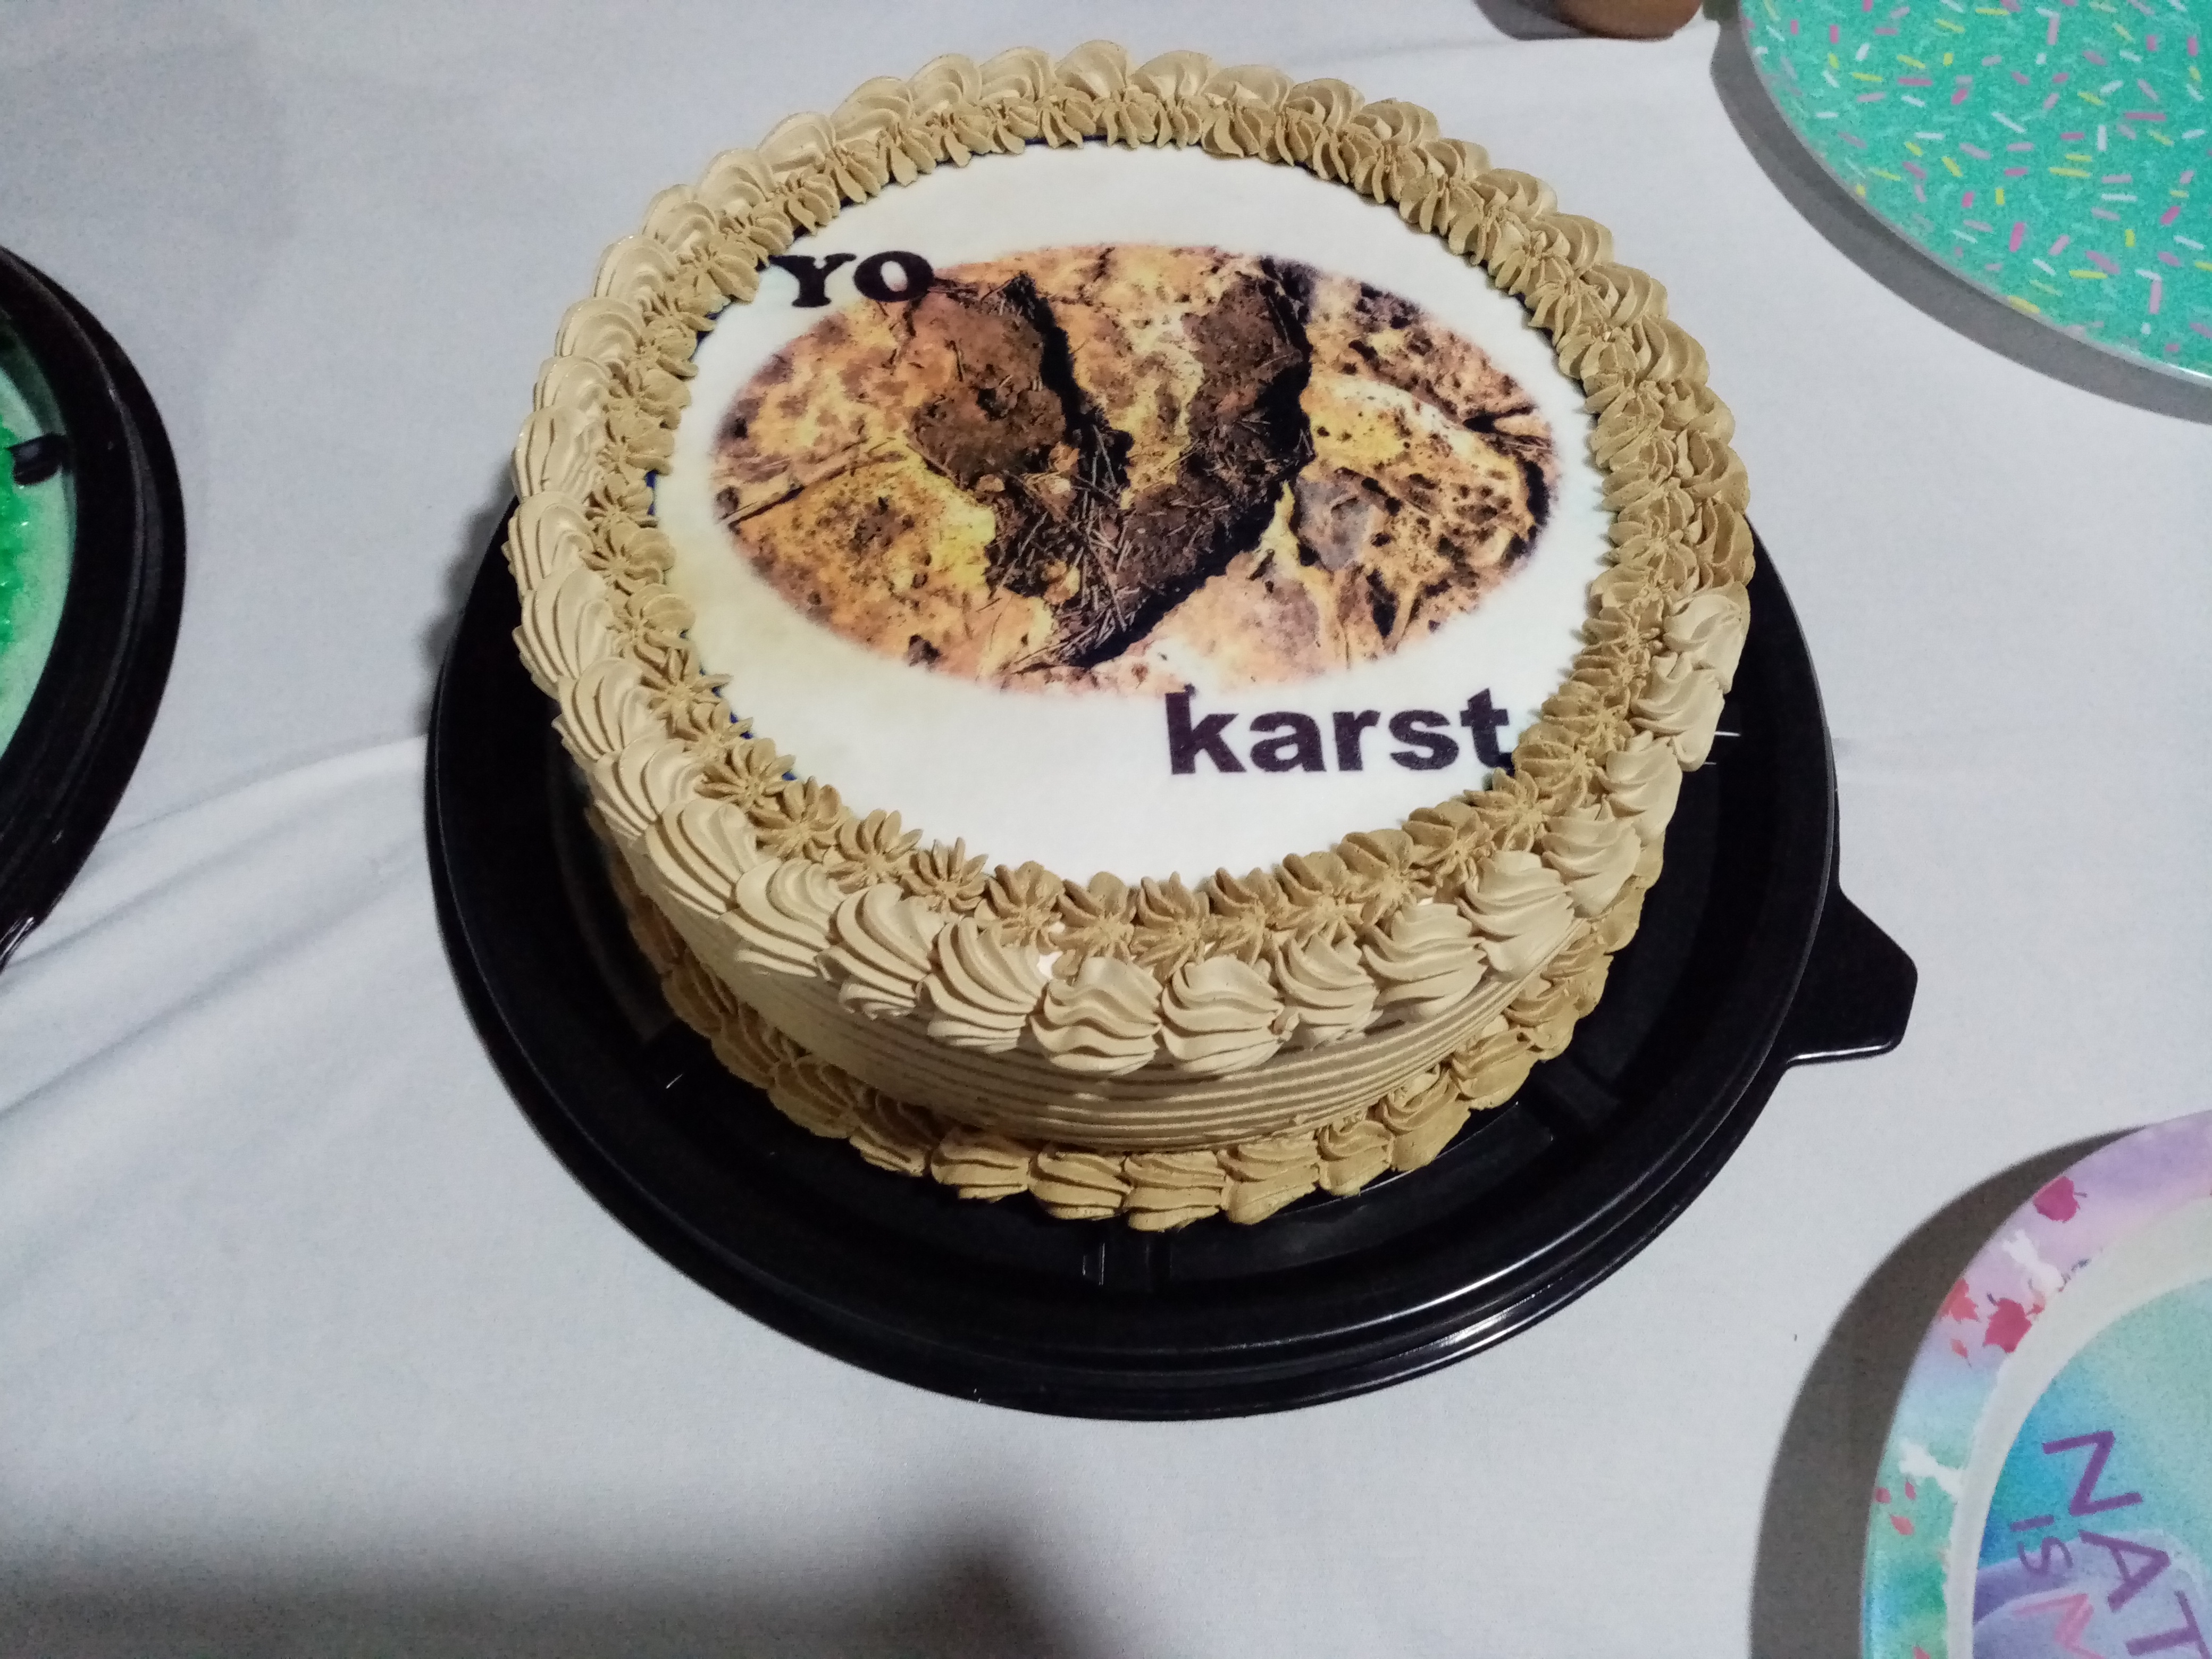 Photo of Karst printed on cake